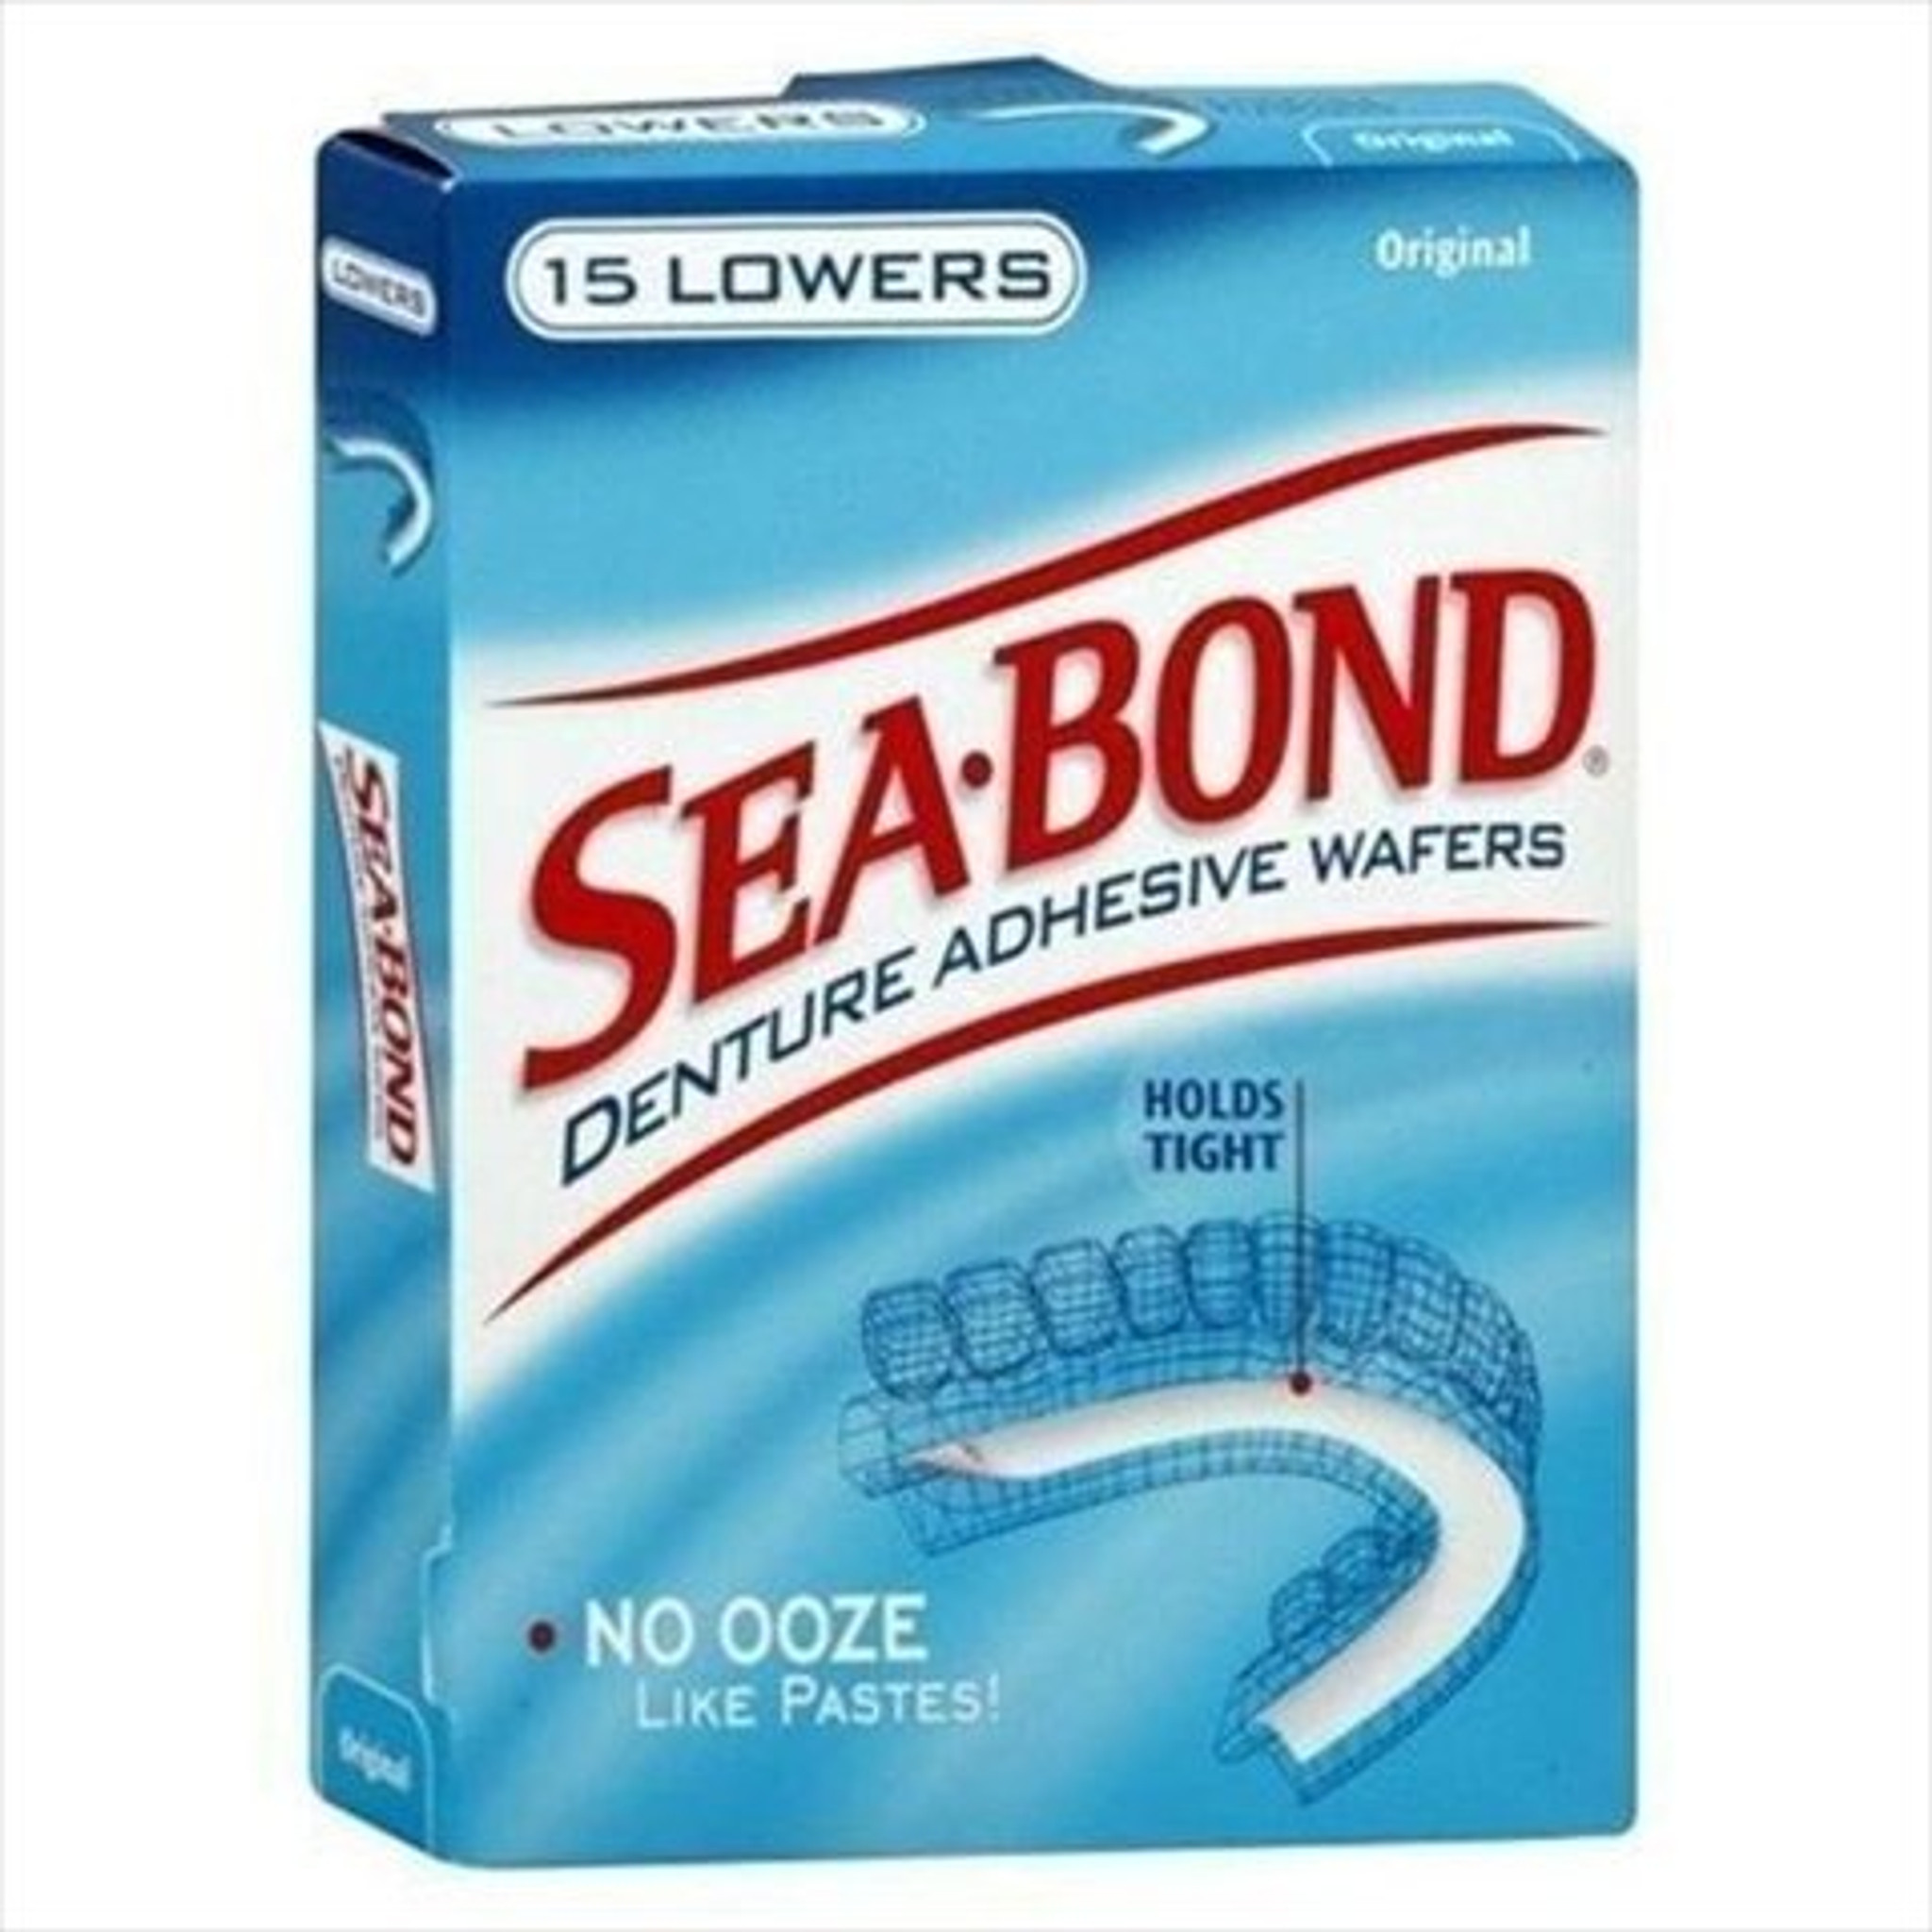 Sea-Bond Triple Action Denture Adhesive Lowers, Original - 15 count